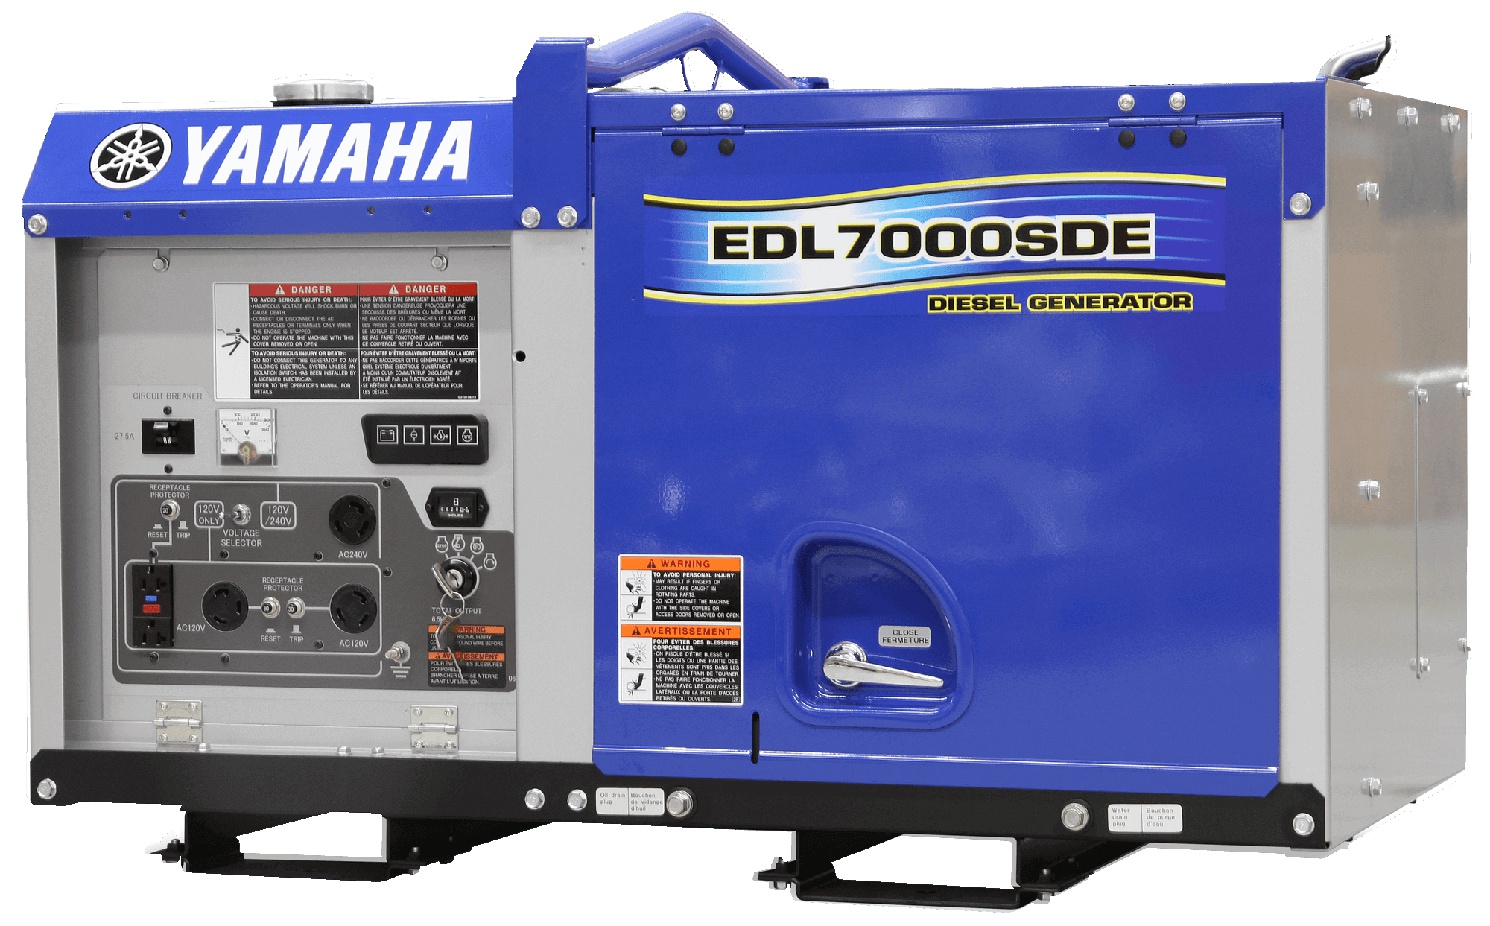  Yamaha Diesel EDL7000SDE